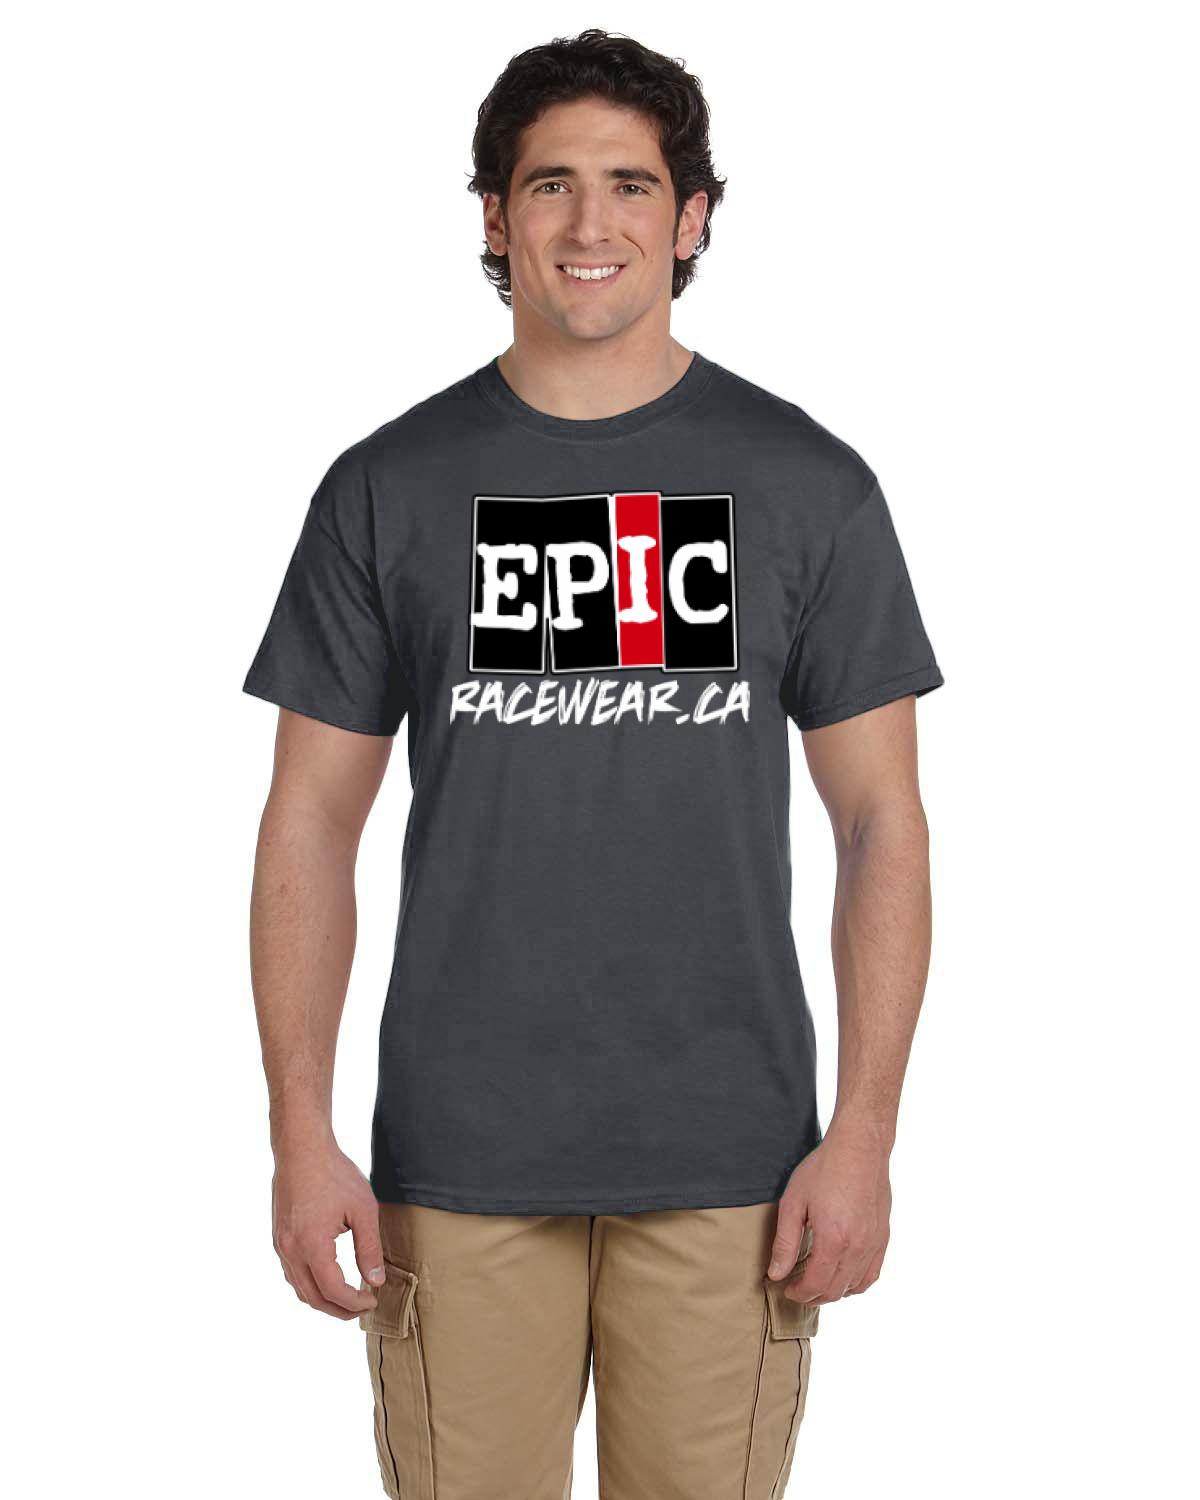 EPIC Racewear TShirt